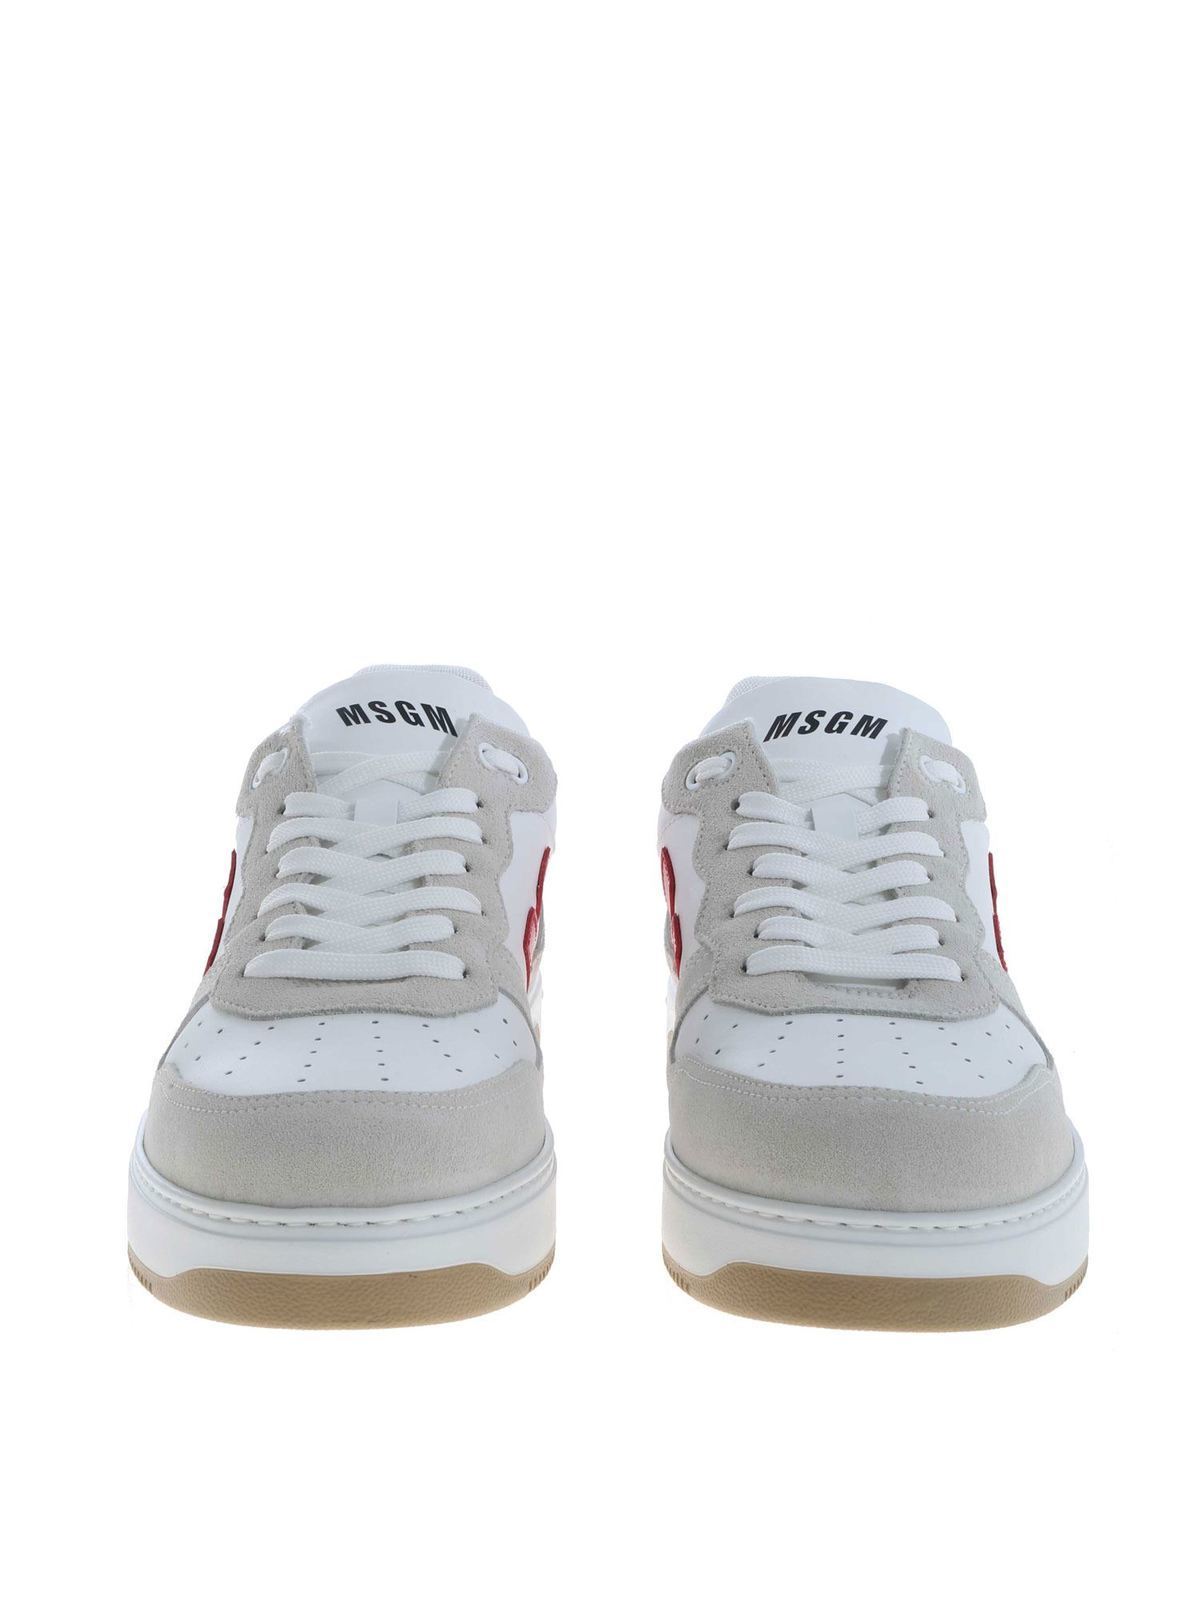 msgm white sneakers